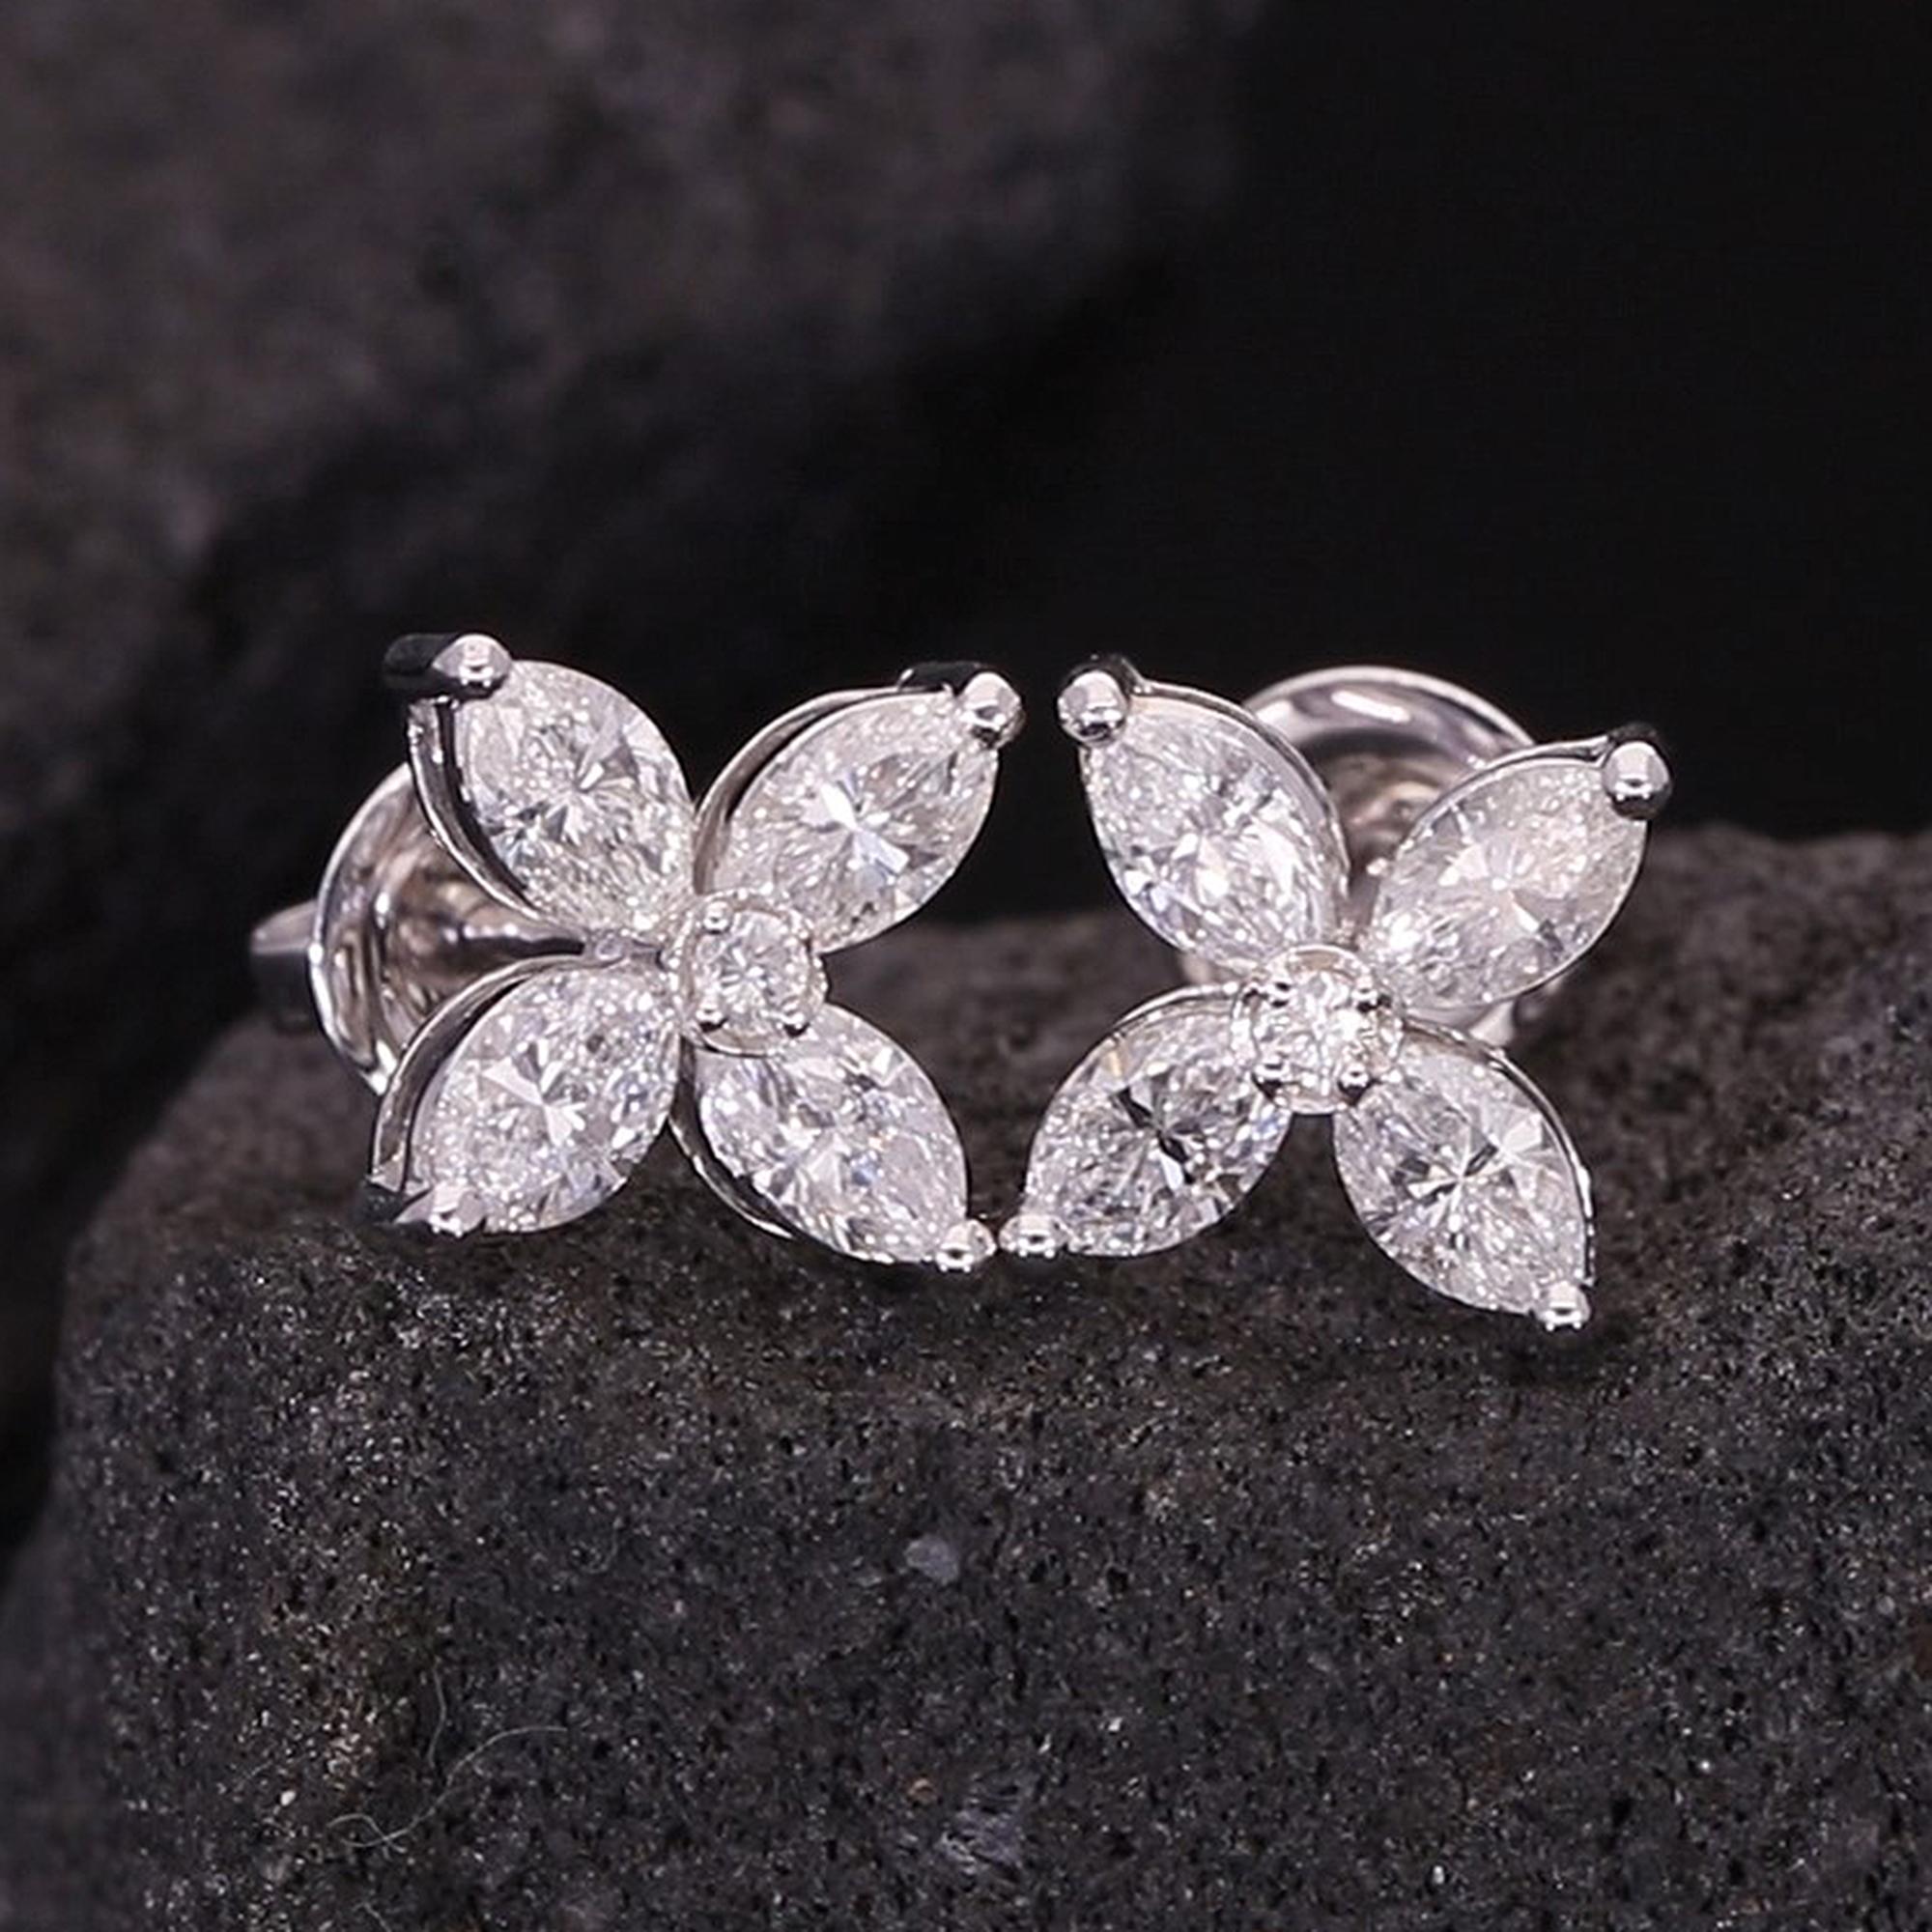 1.6 ct diamond earrings